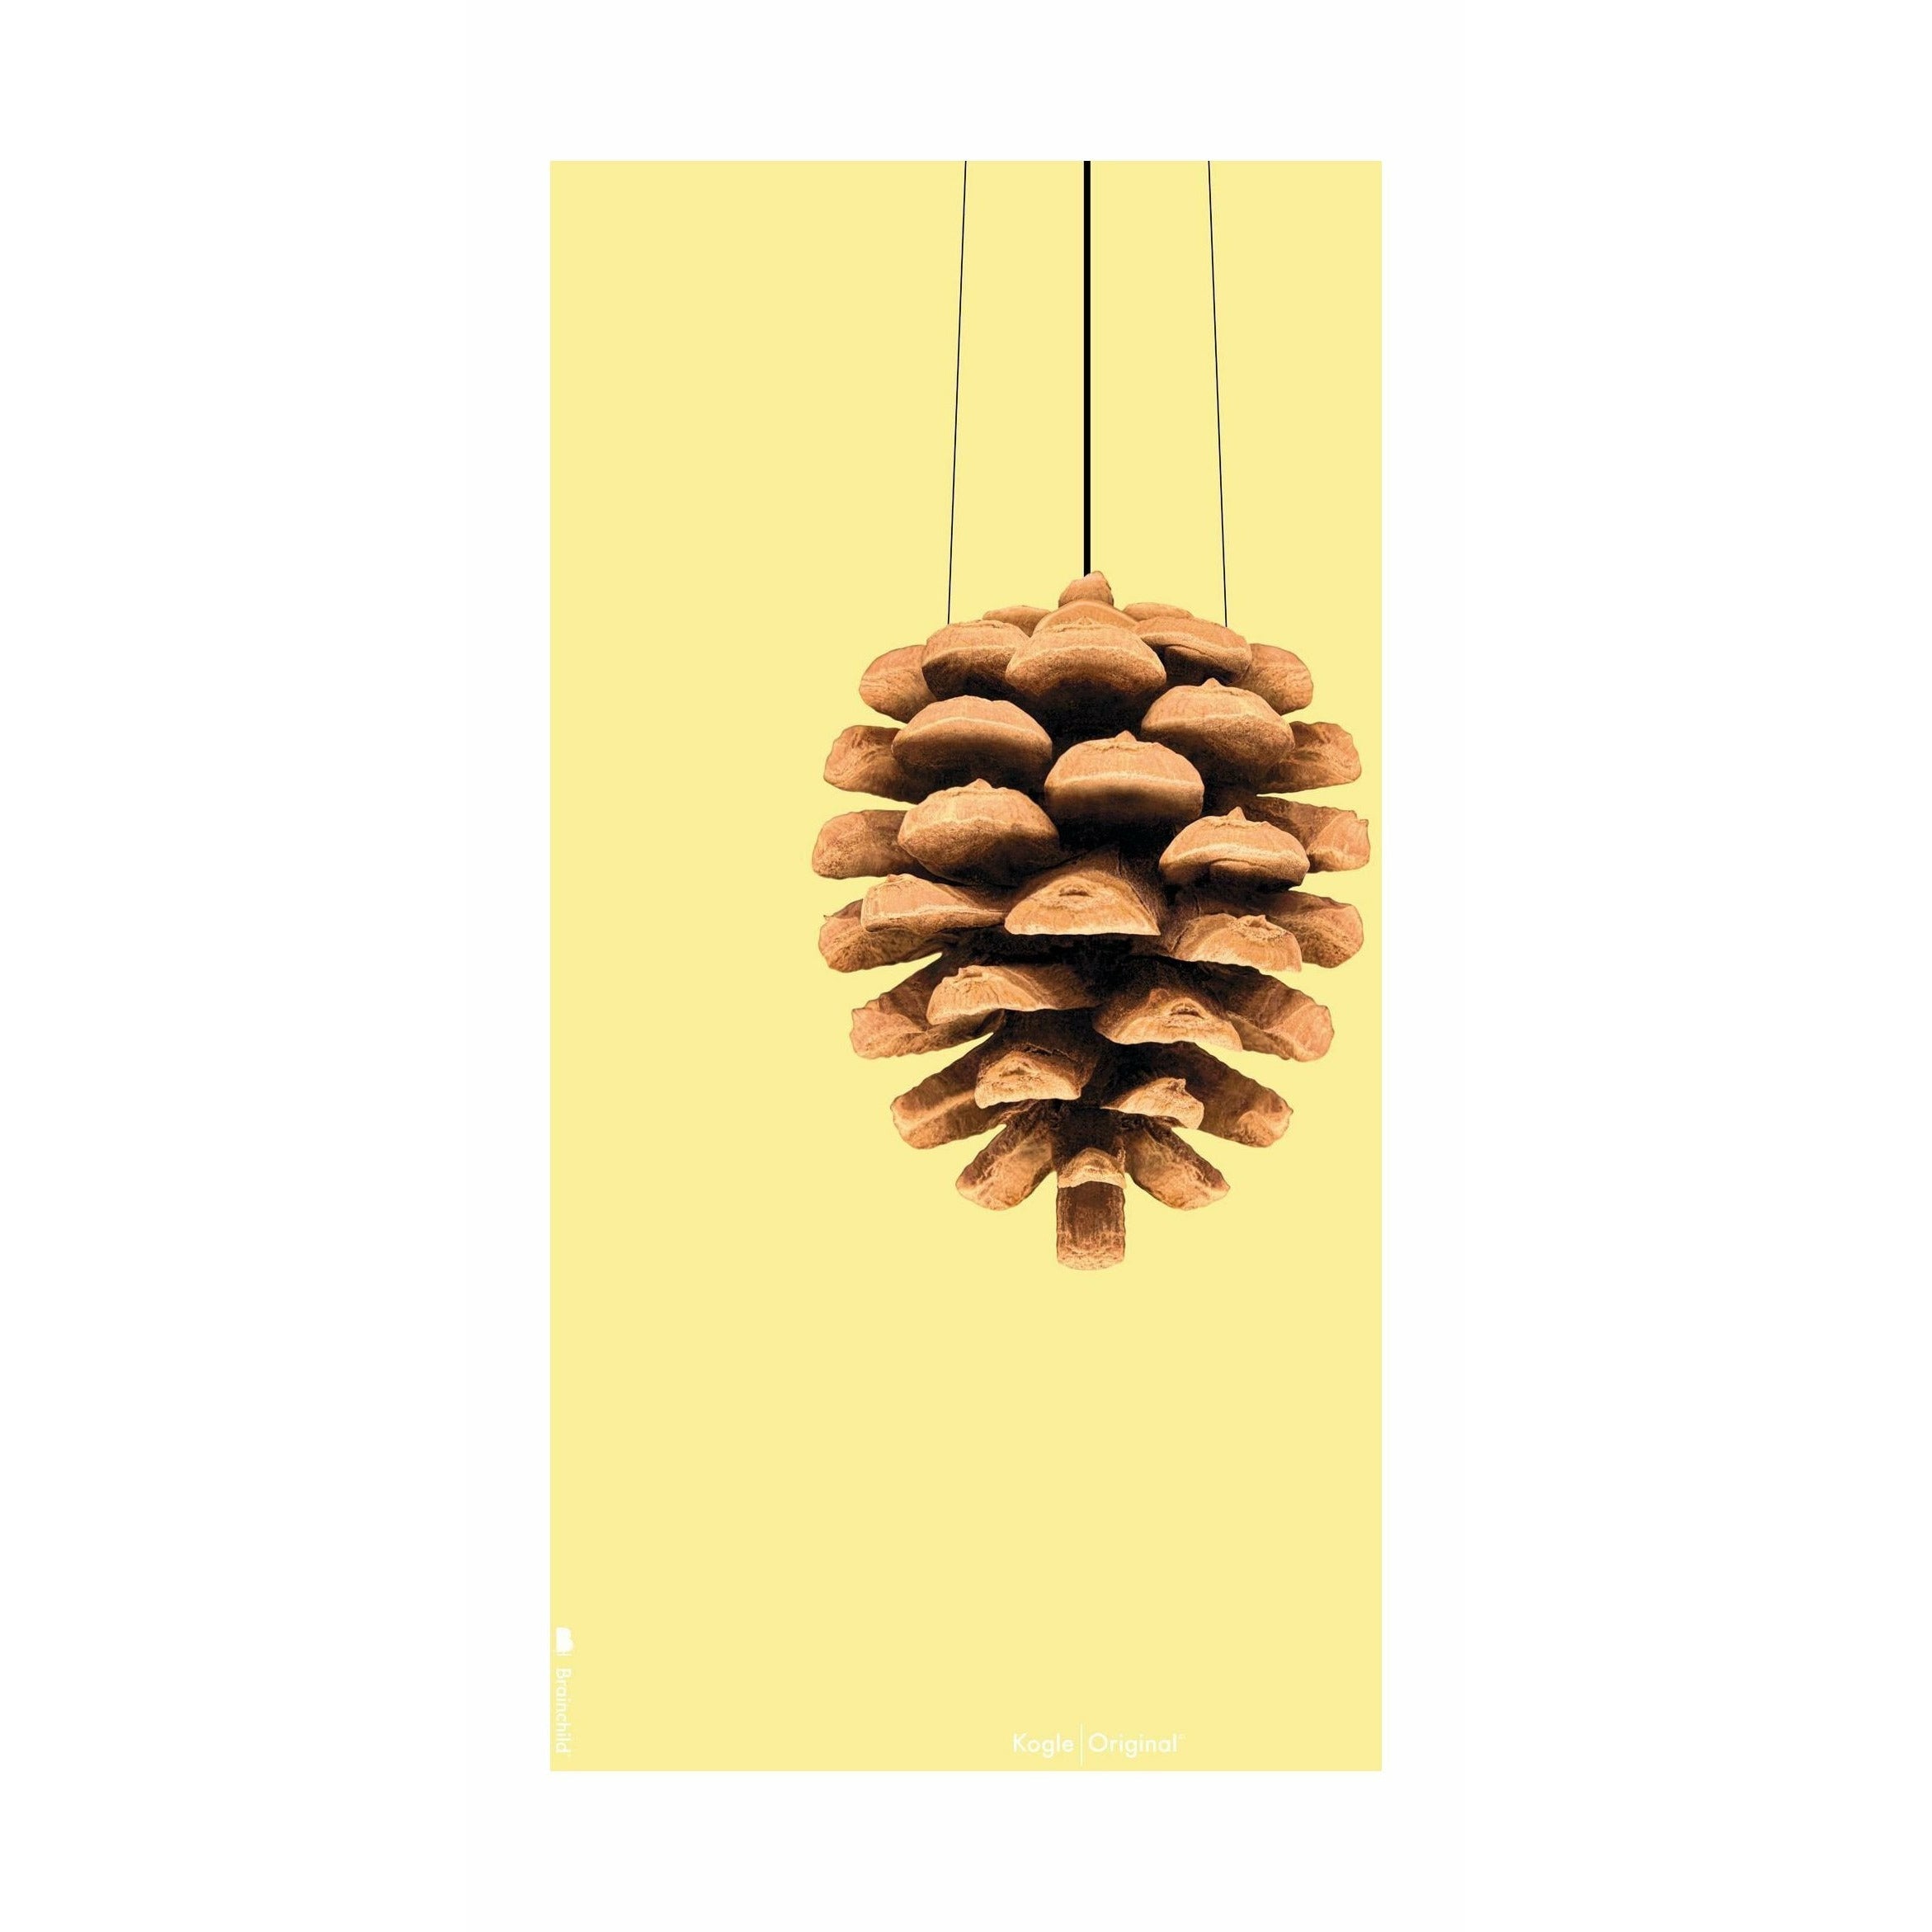 Brainchild Pine Cone Classic Poster uten ramme 30 x40 cm, gul bakgrunn